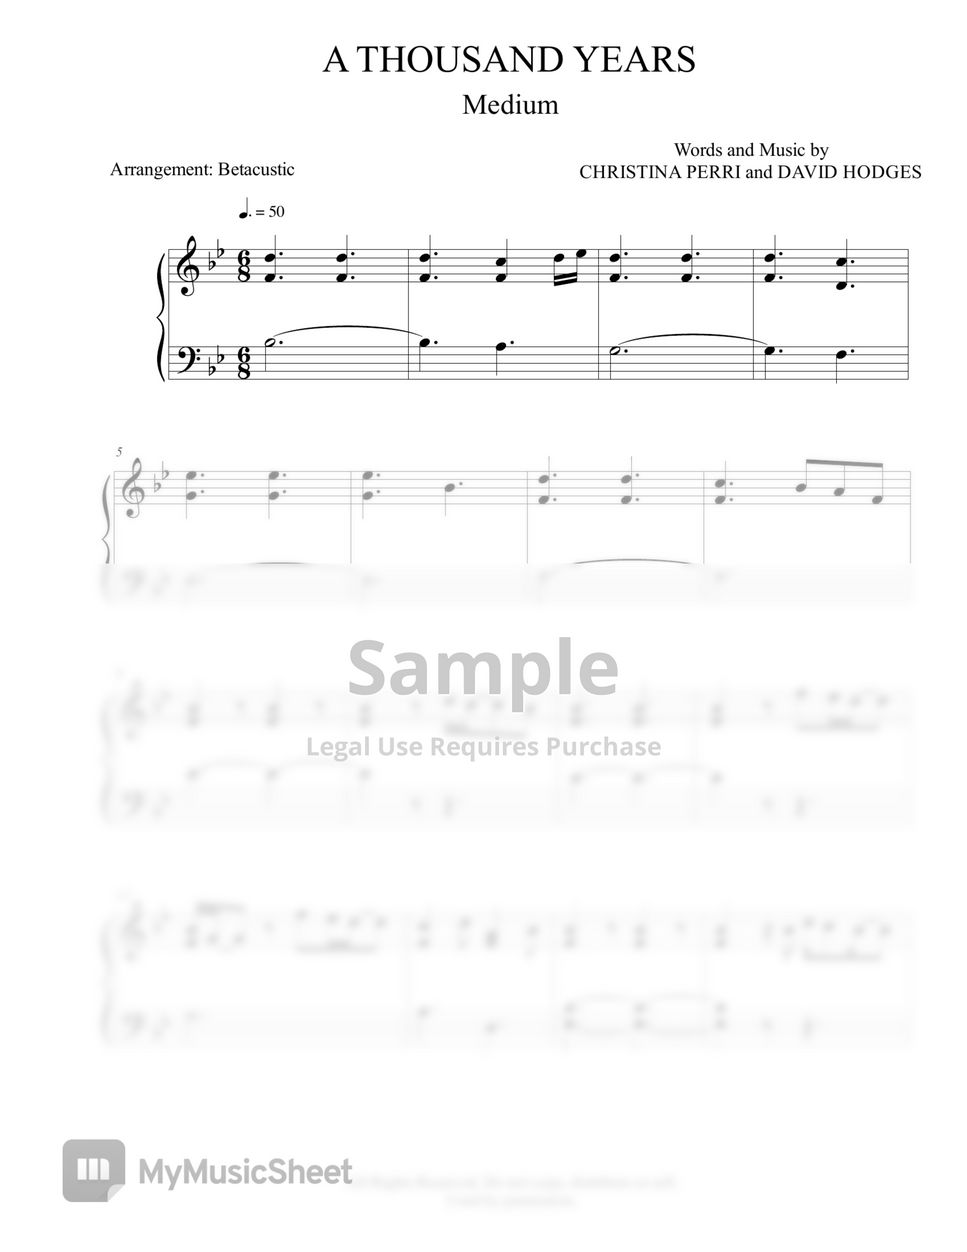 Christina Perri - A Thousand Years (Medium Piano) by Betacustic